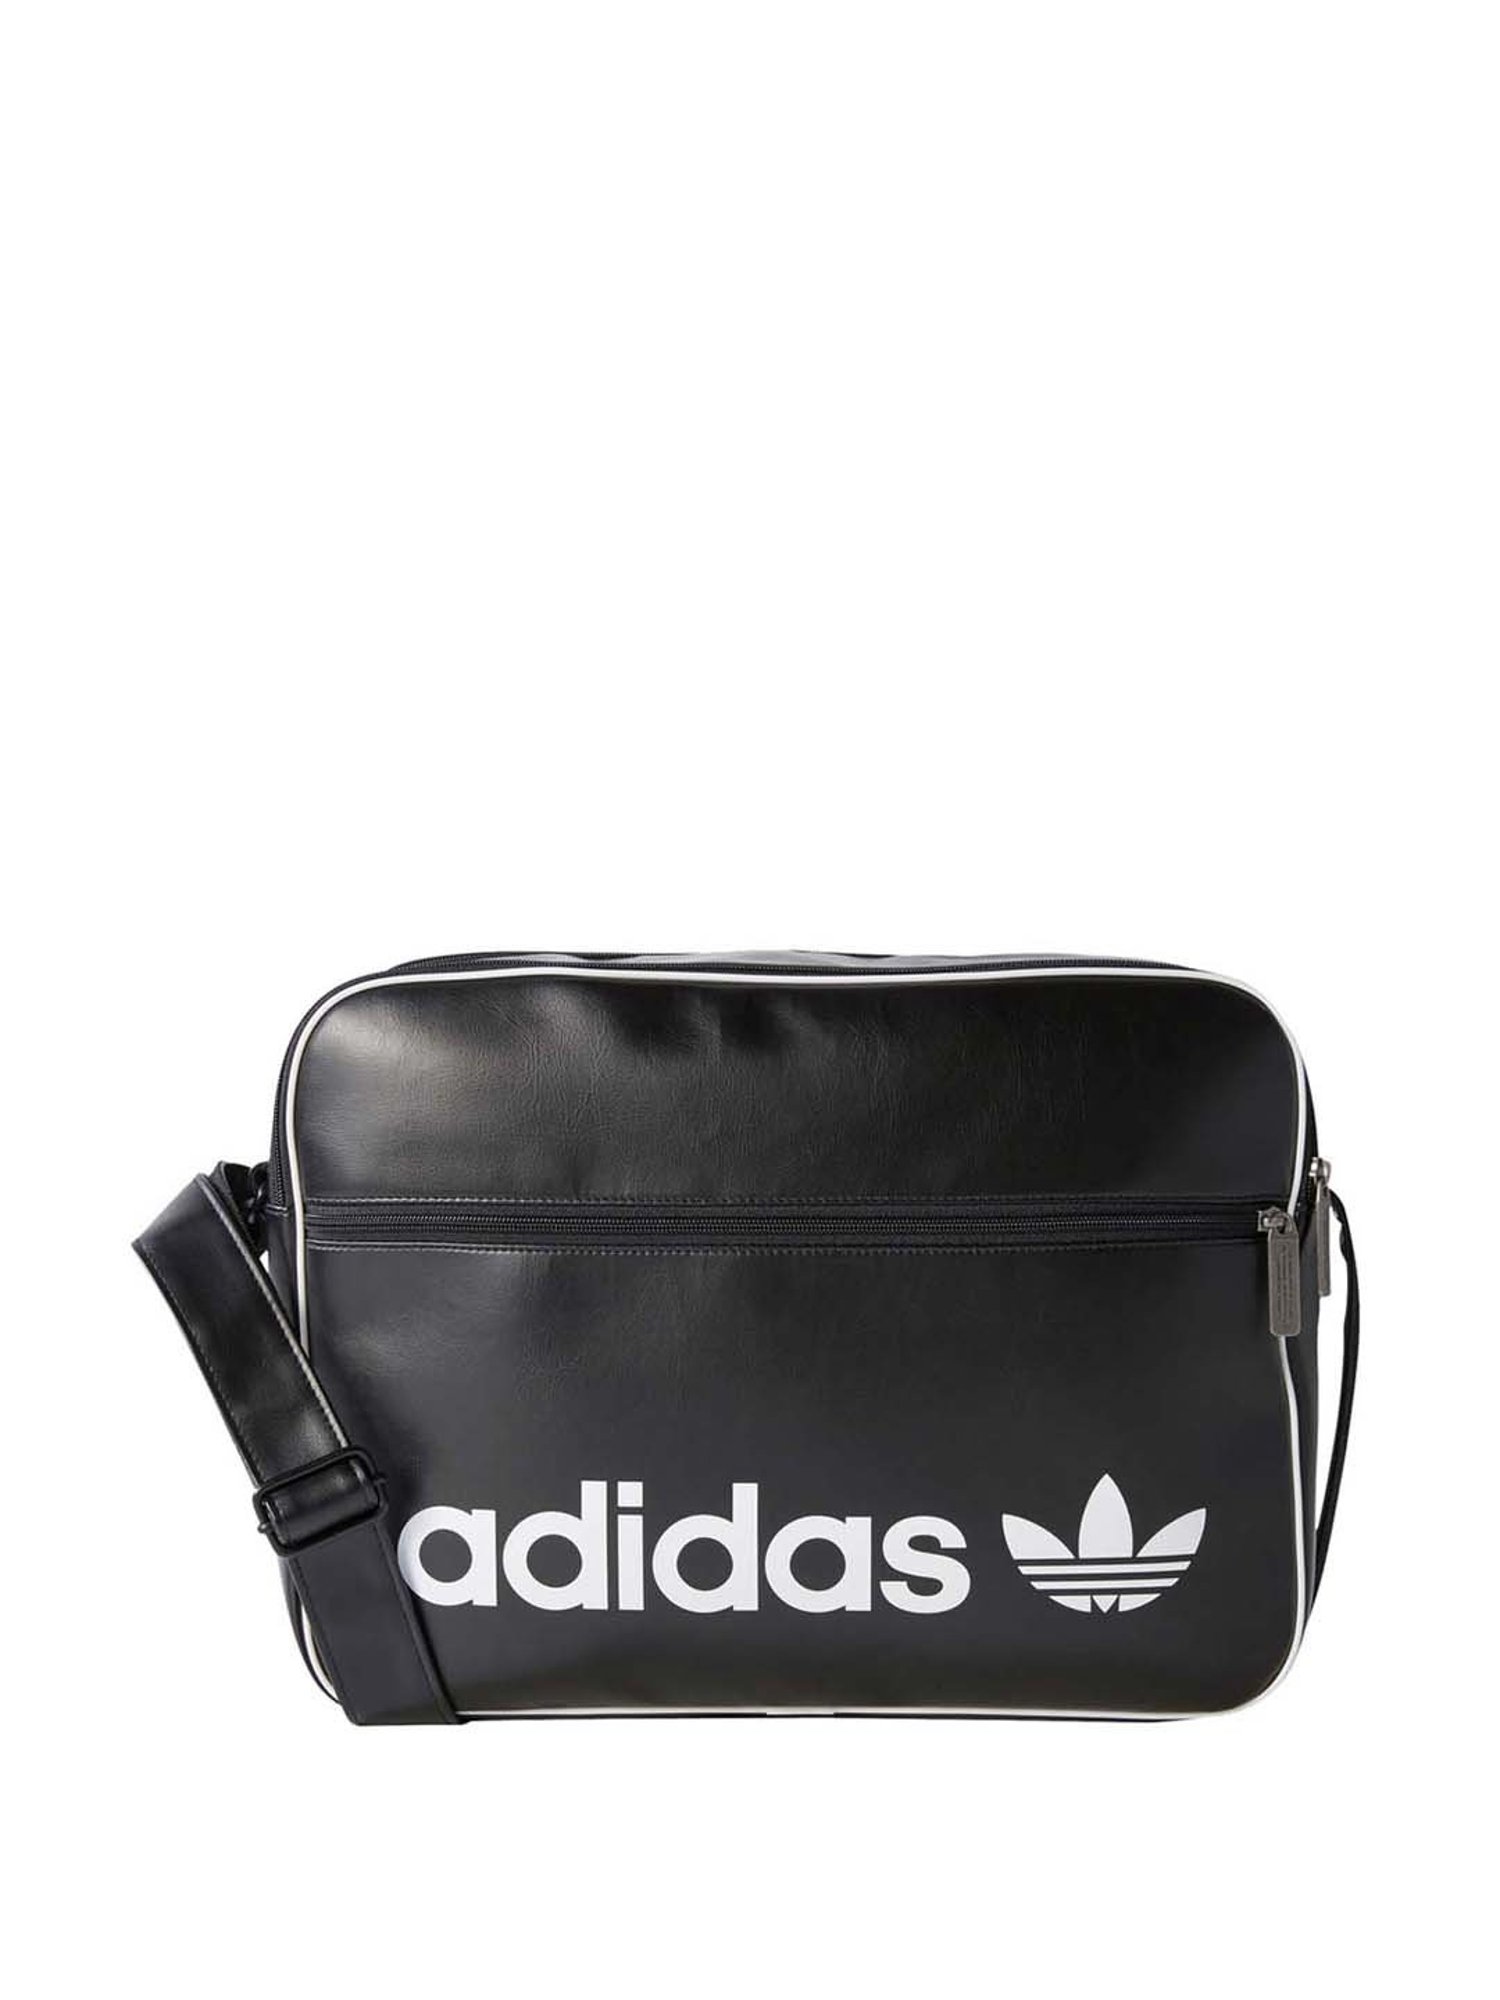 Buy Adidas Black Medium Messenger Bag Online At Best Price  Tata CLiQ